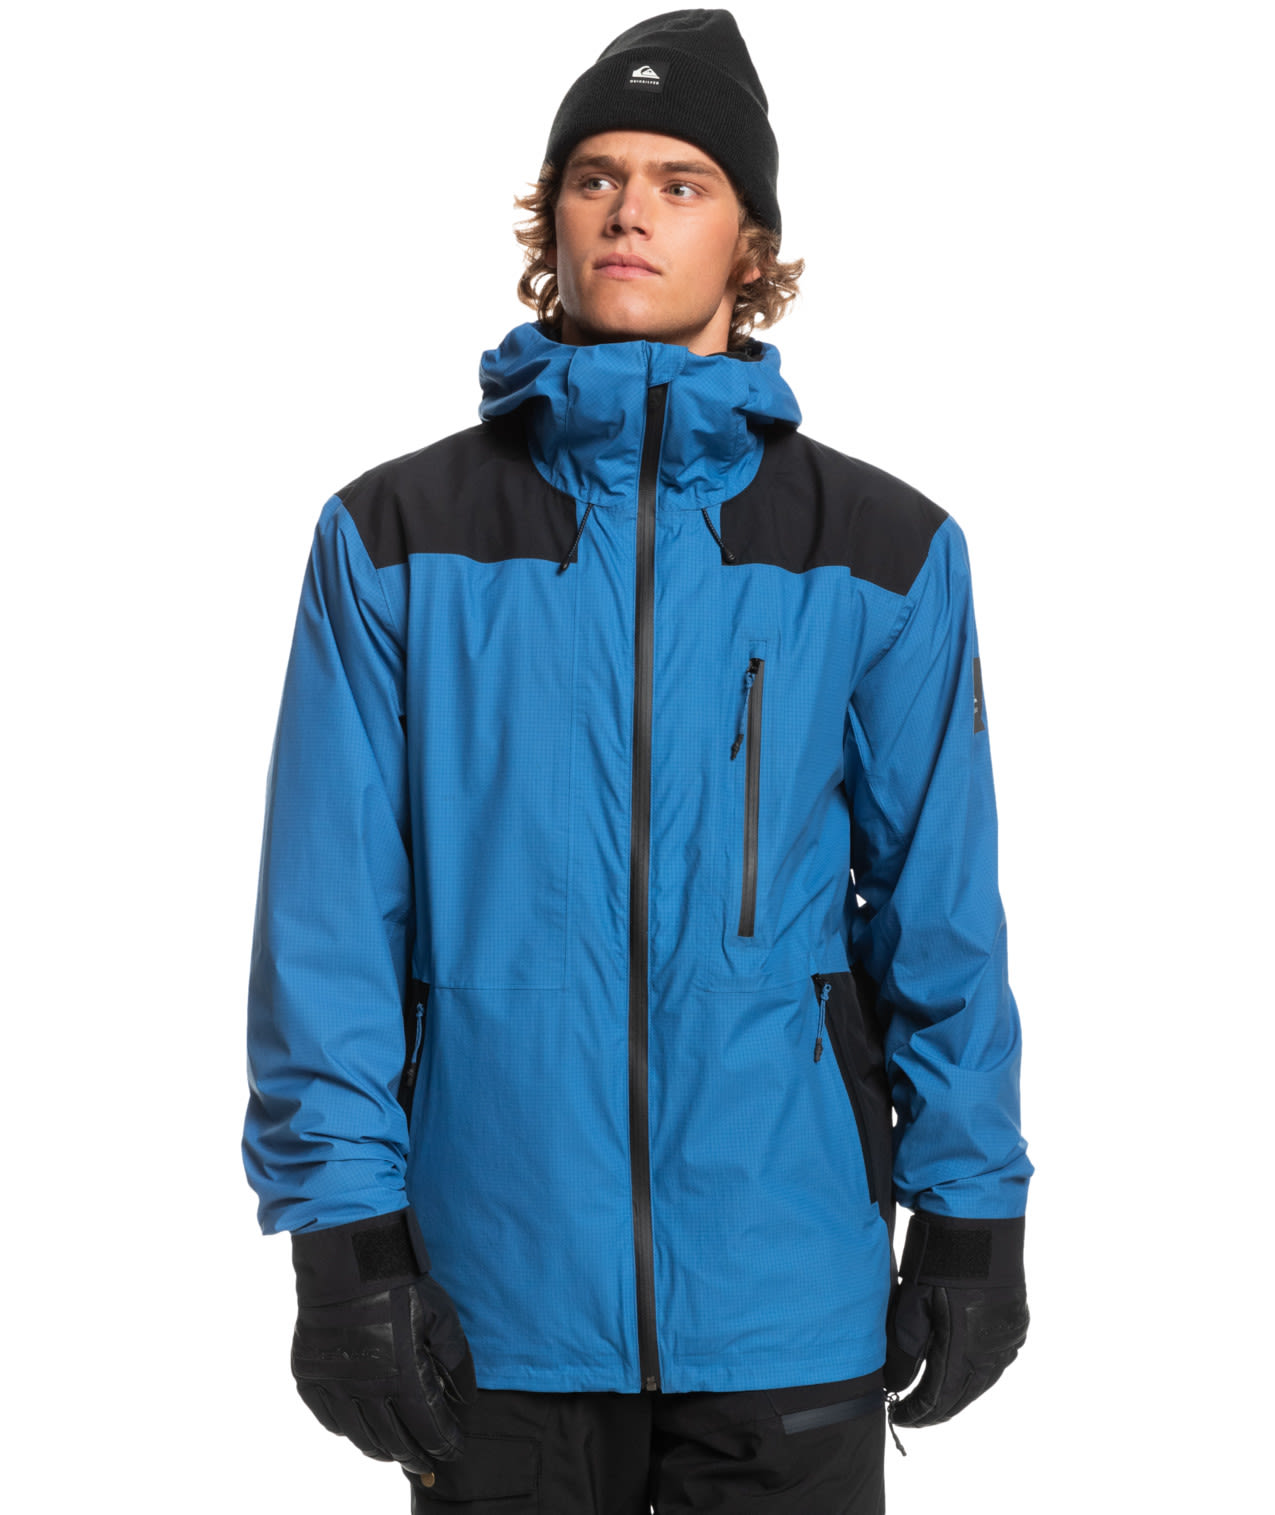 Quiksilver M Travis Rice Gore Infinium Jacket Blau | Herren Ski- & Snowboardjack